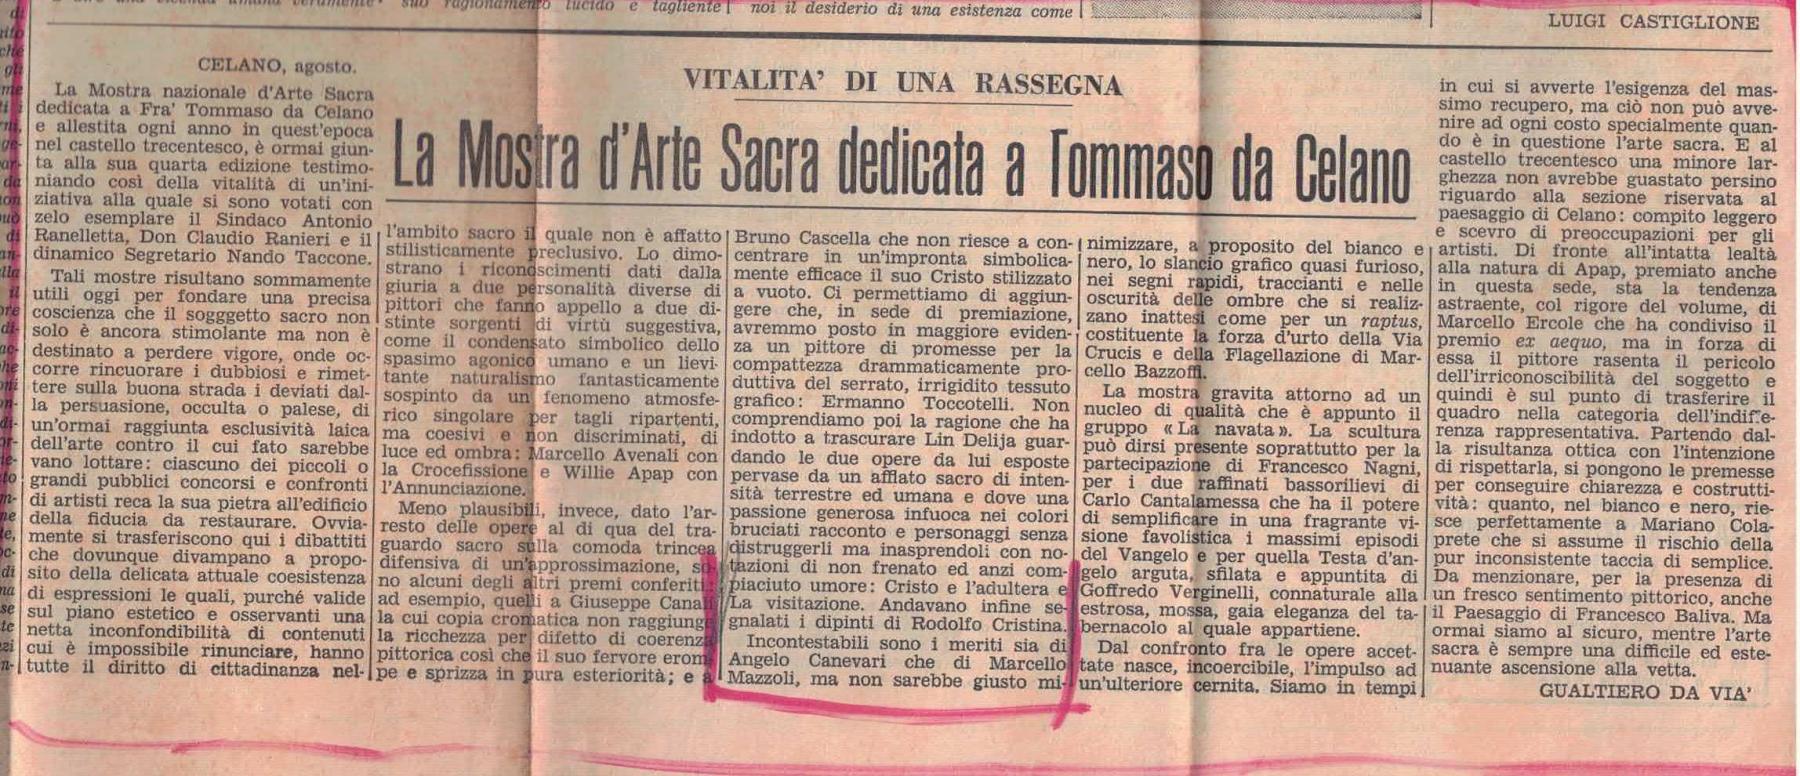 L' OSSERVATORIO ROMANO - 11-08-1966